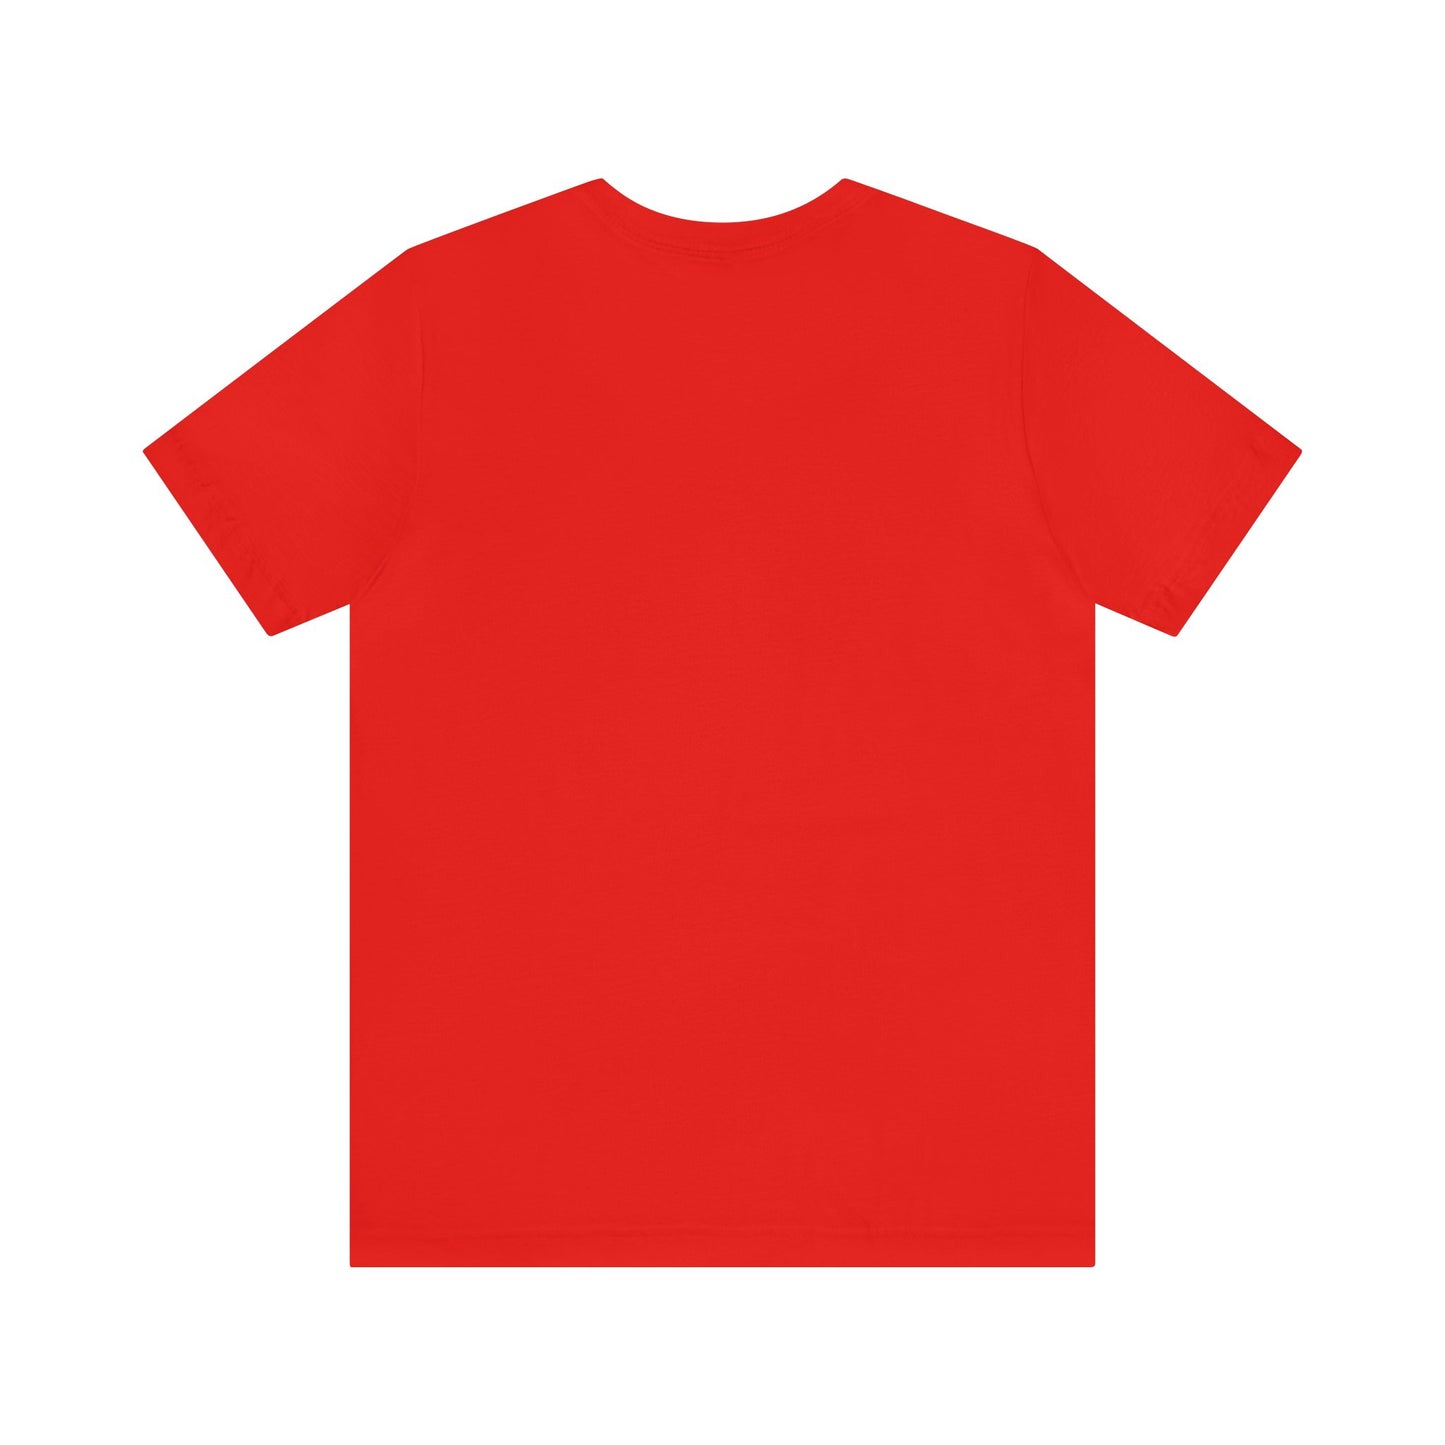 Unisex Jersey Short Sleeve Poppy Red T Shirt